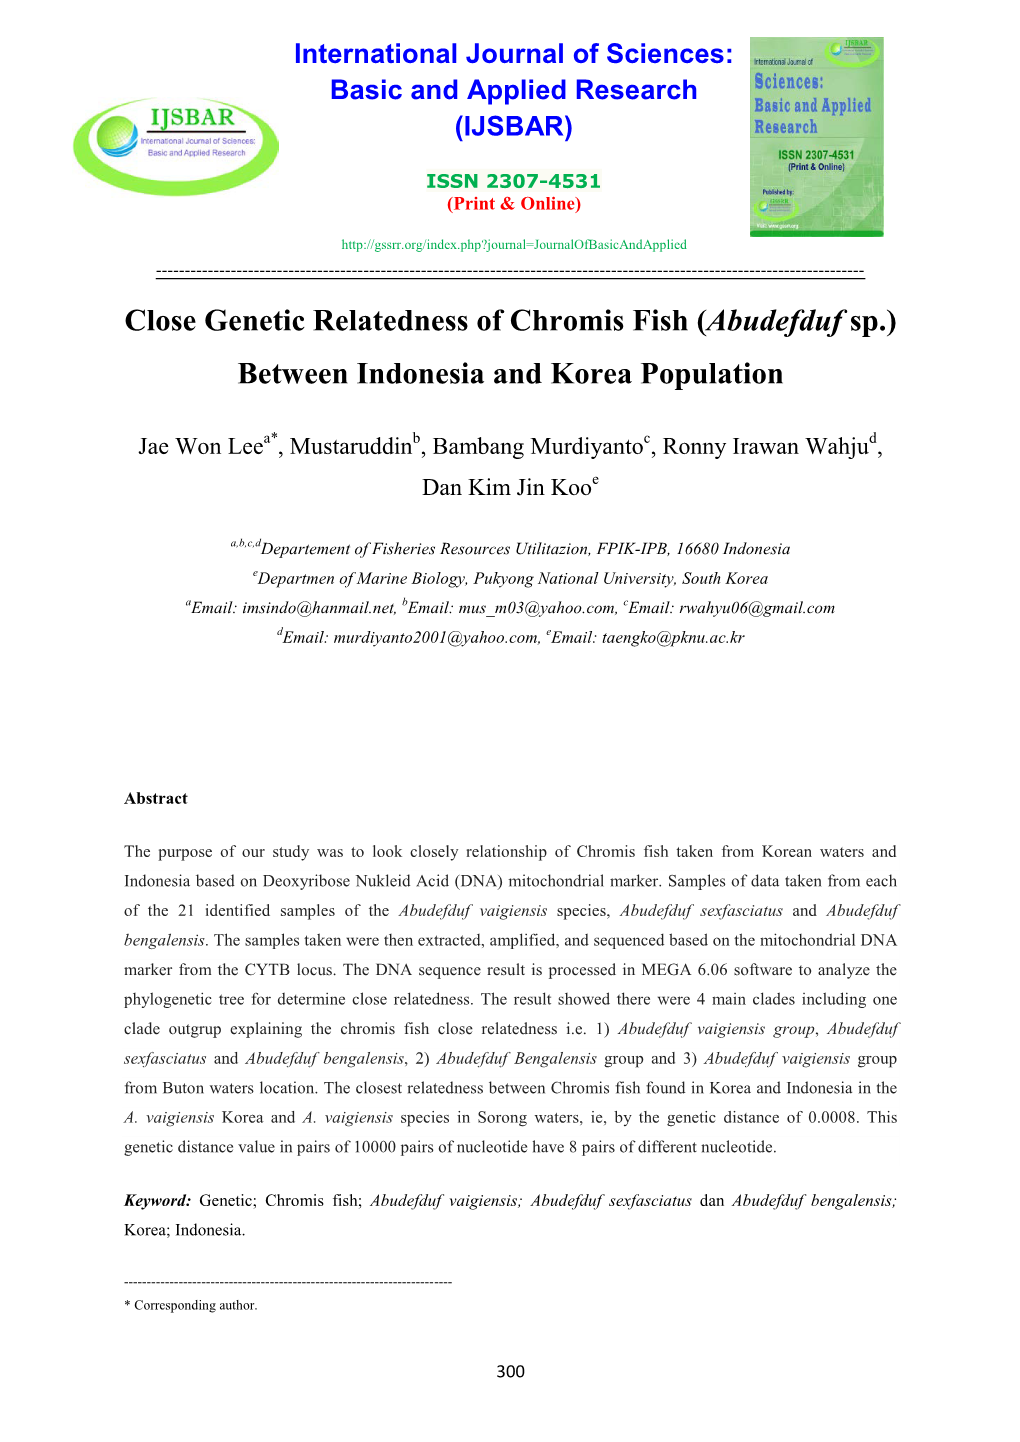 Close Genetic Relatedness of Chromis Fish (Abudefduf Sp.) Between Indonesia and Korea Population